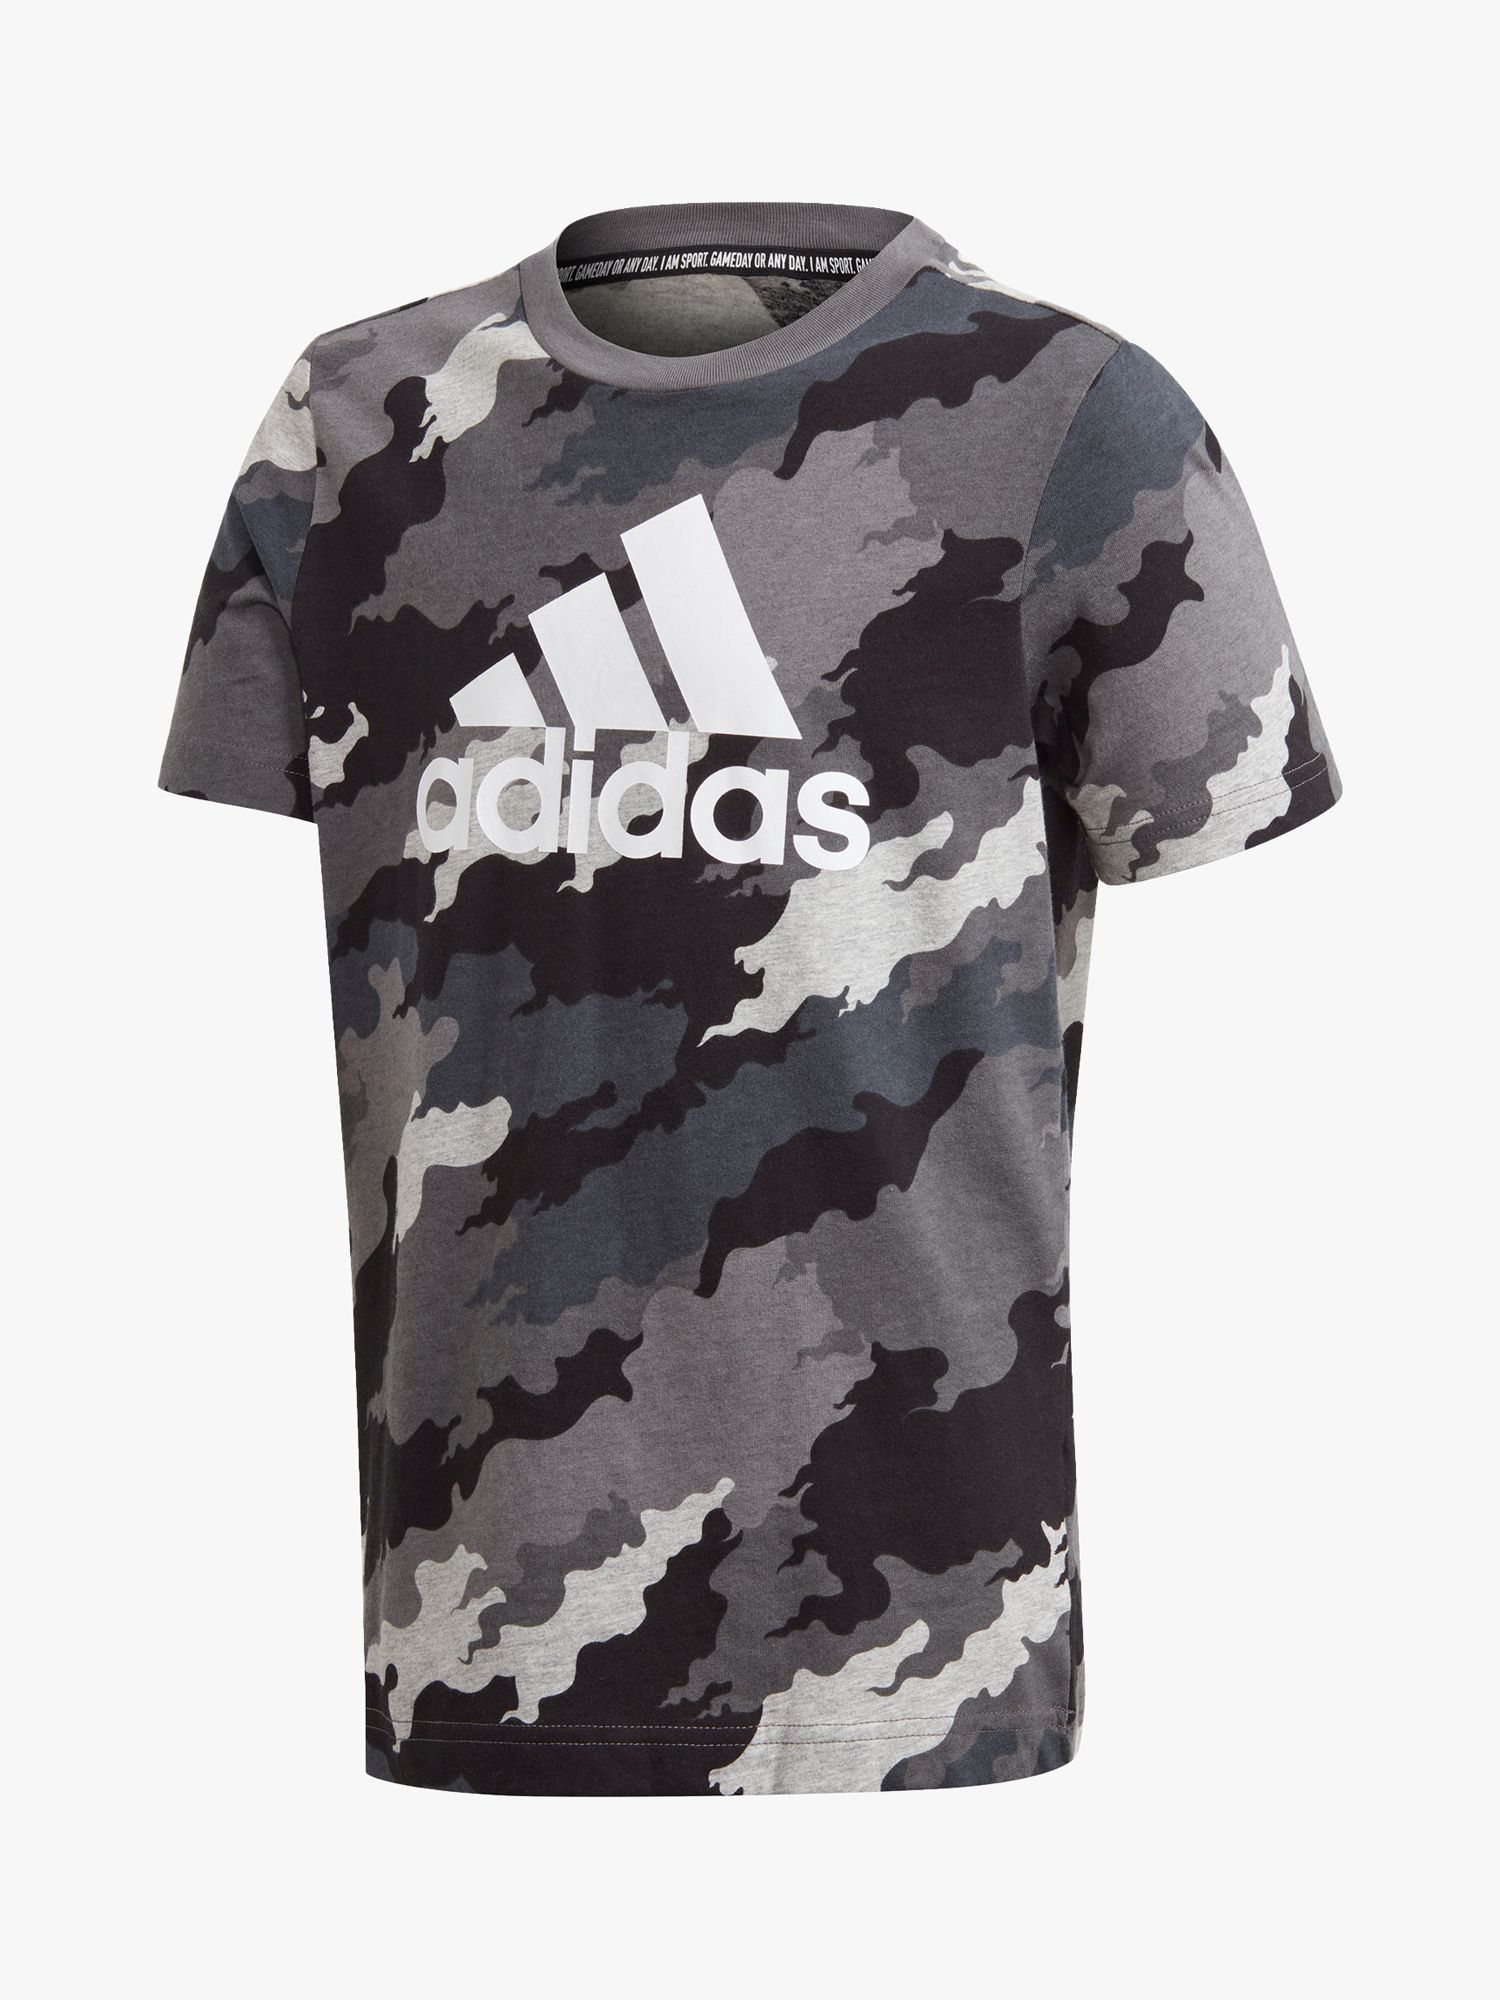 adidas Boys' Camo Logo T-Shirt, Grey at 